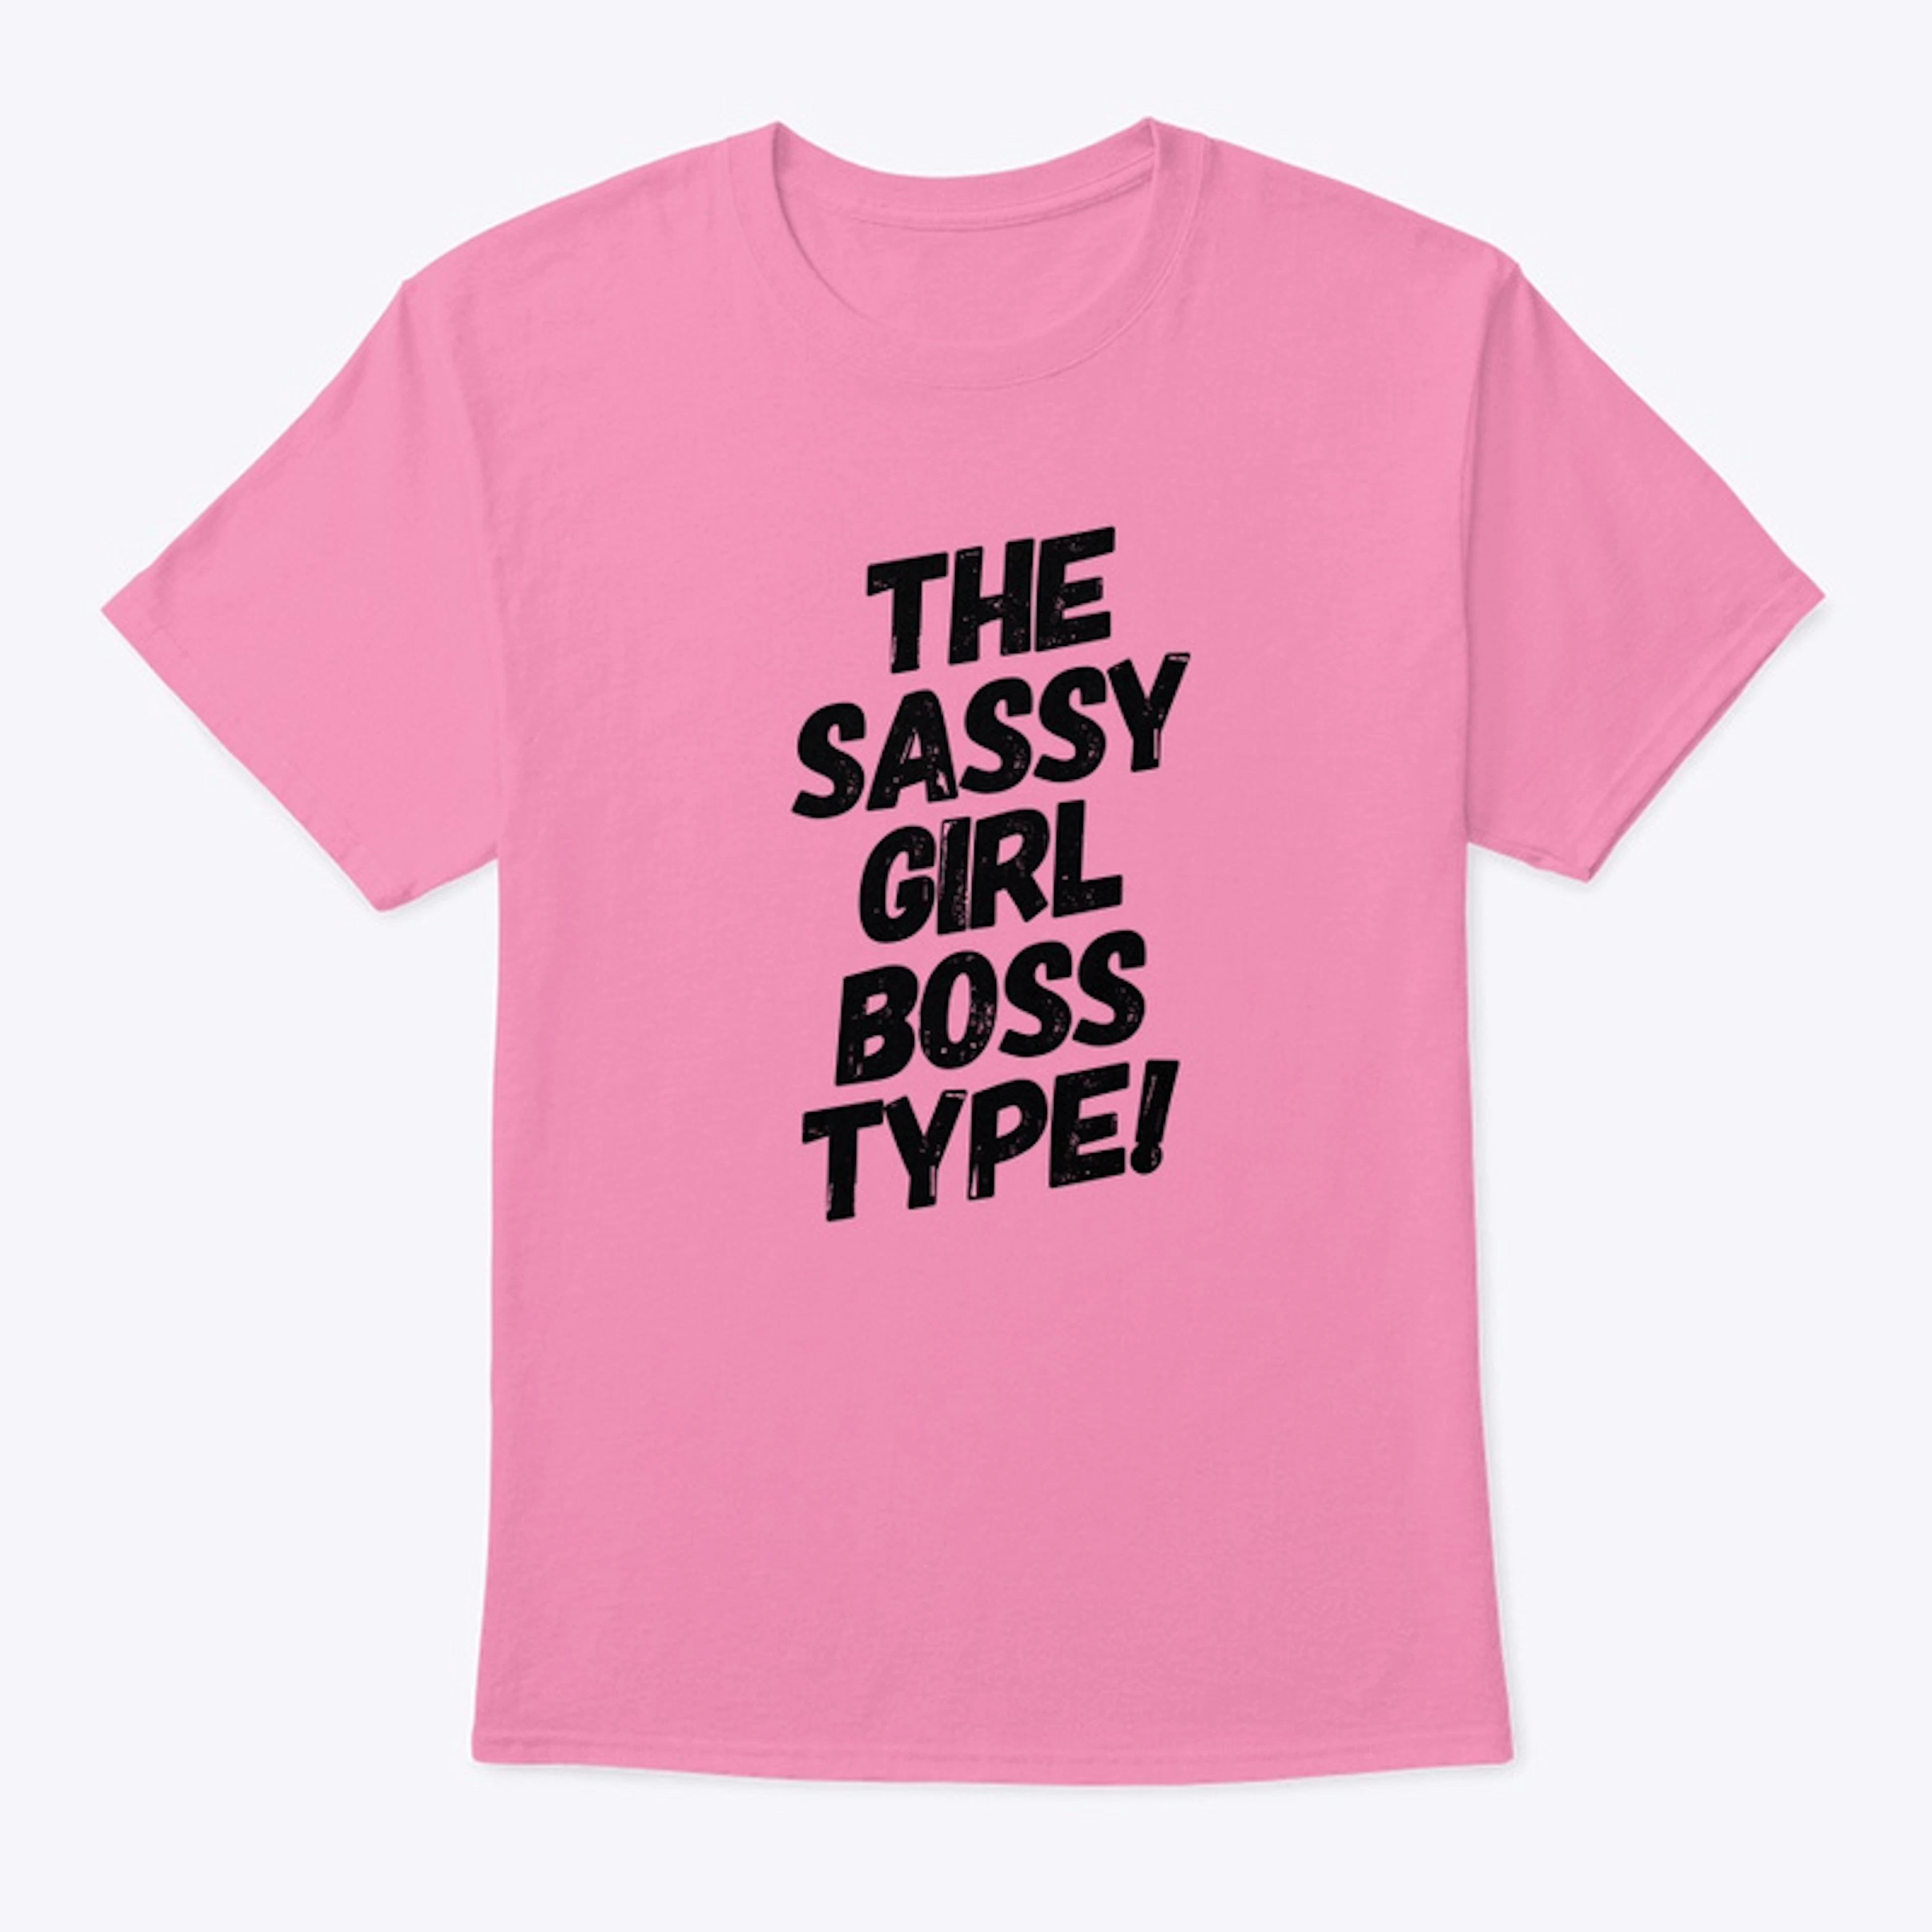 THE SASSY GIRL BOSS TYPE!